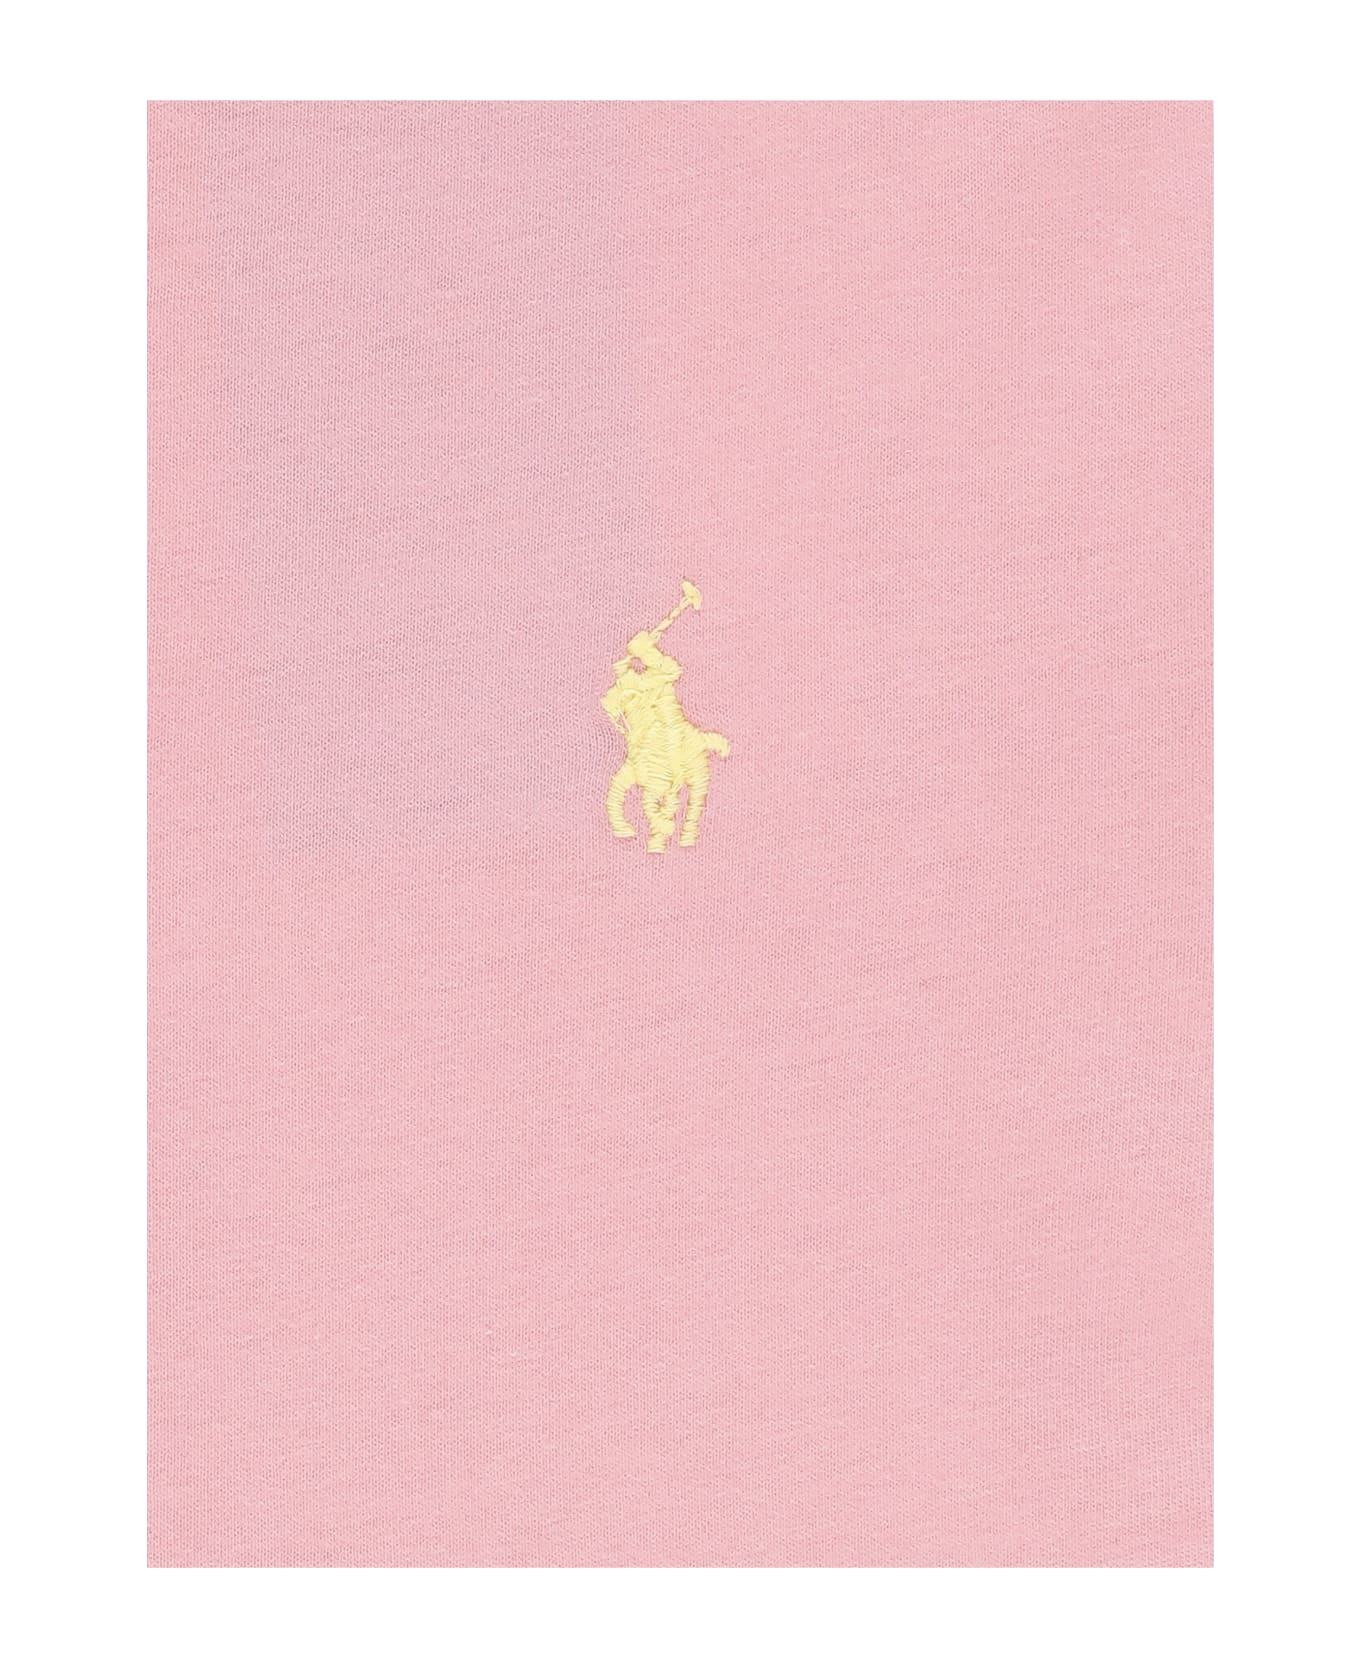 Ralph Lauren Pony T-shirt - Pink